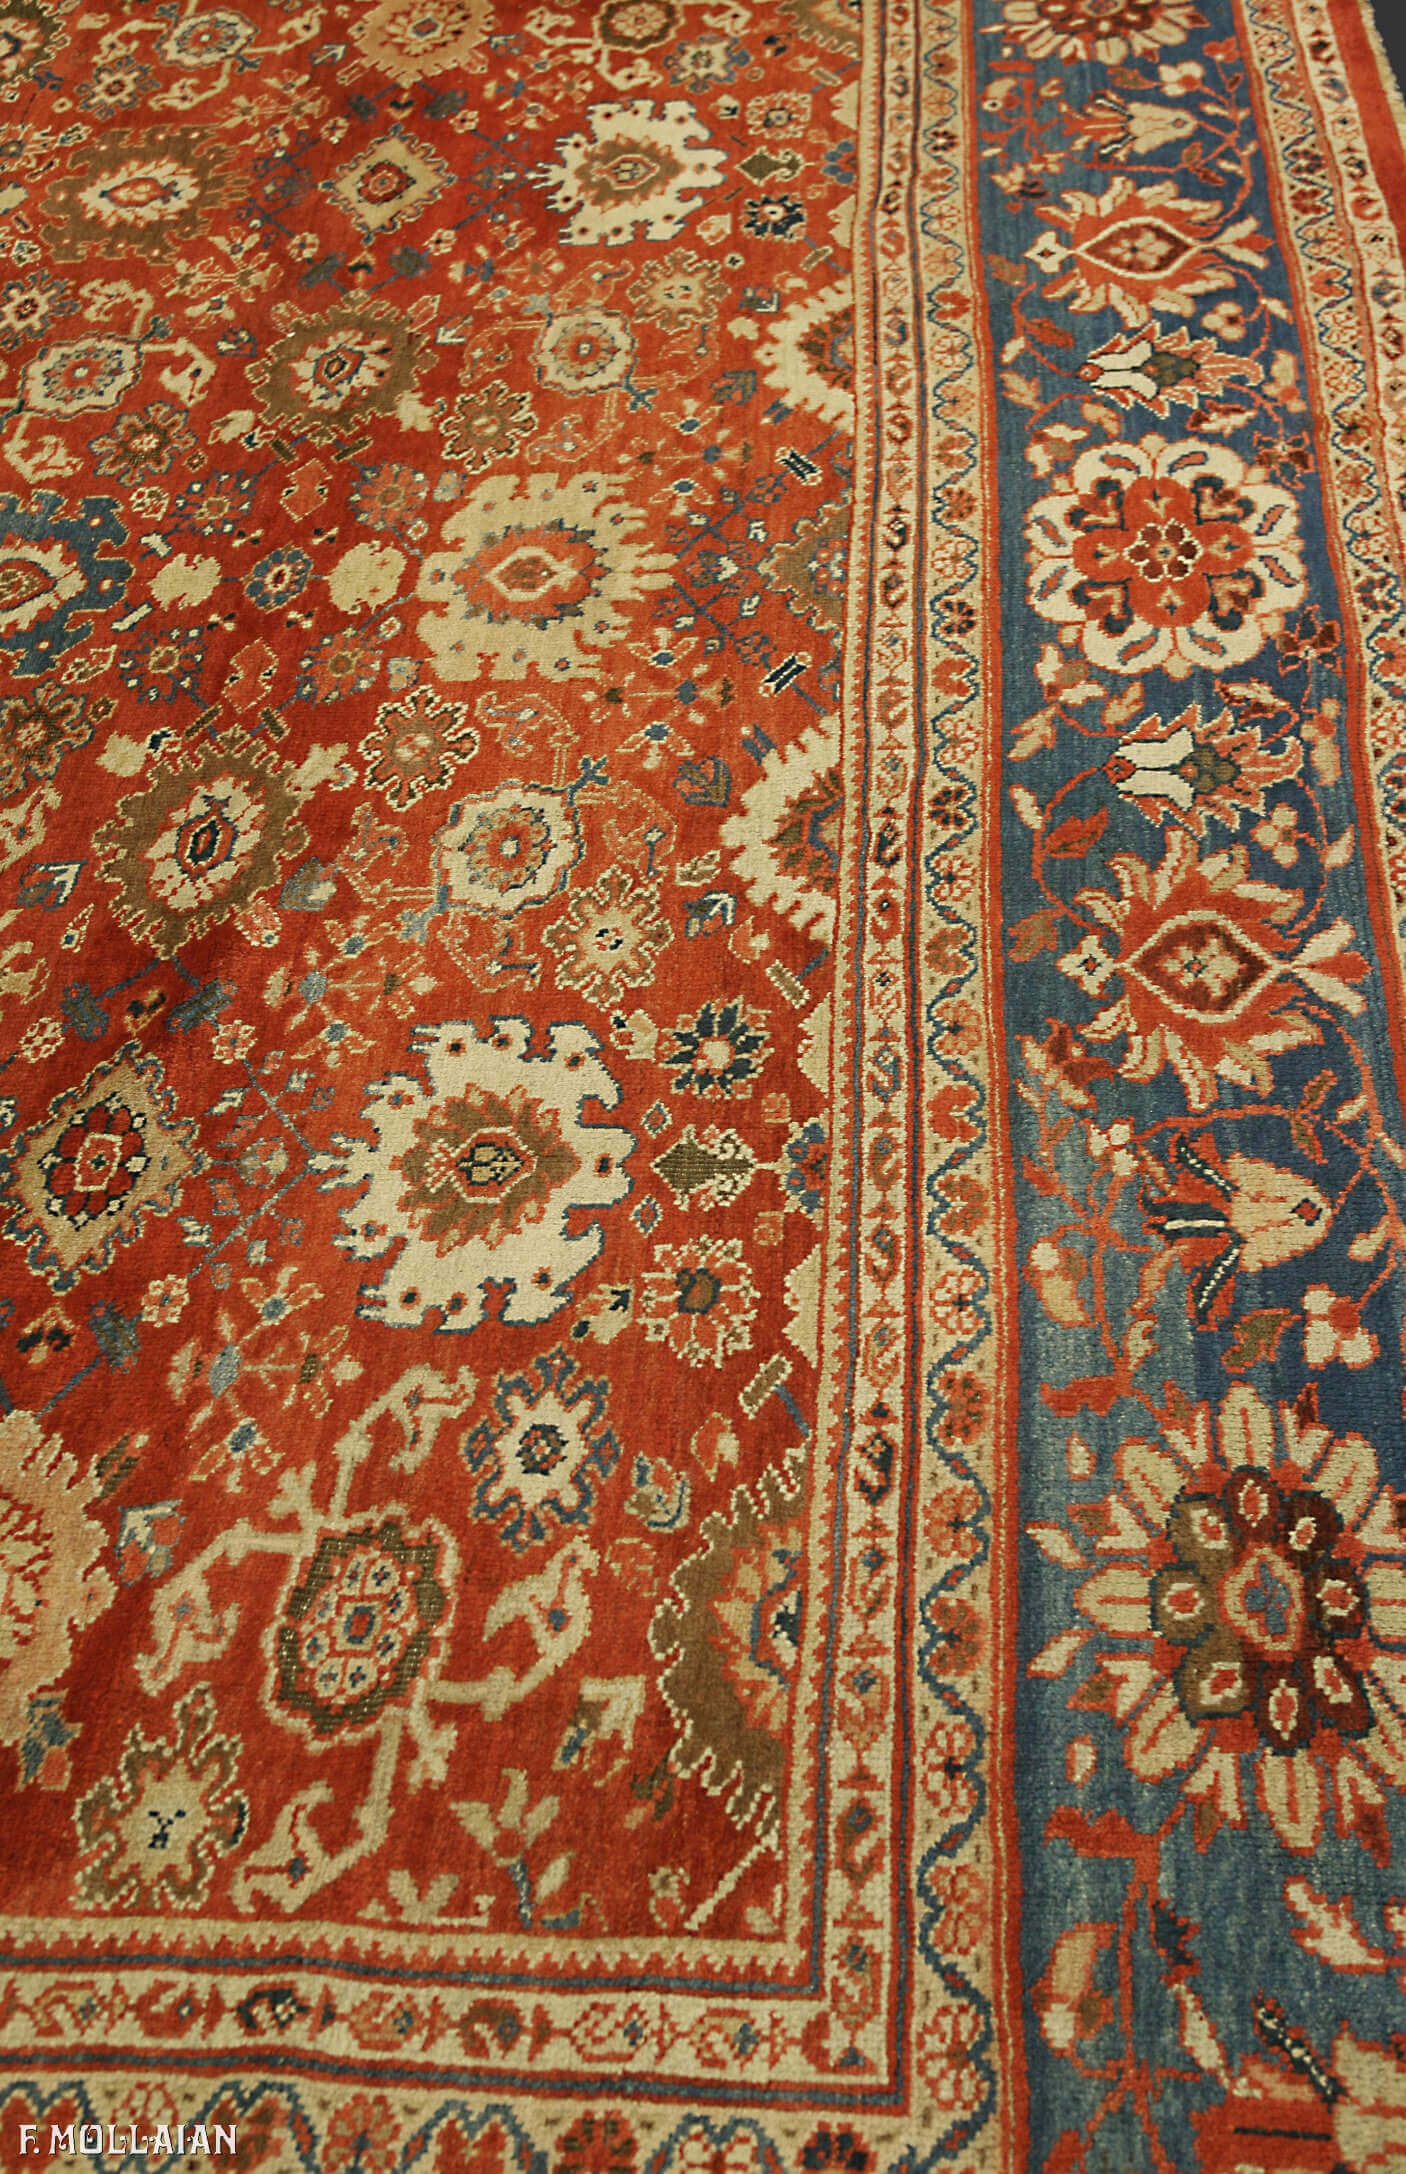 Antique Persian Mahal Ziegler Carpet n°:55348489